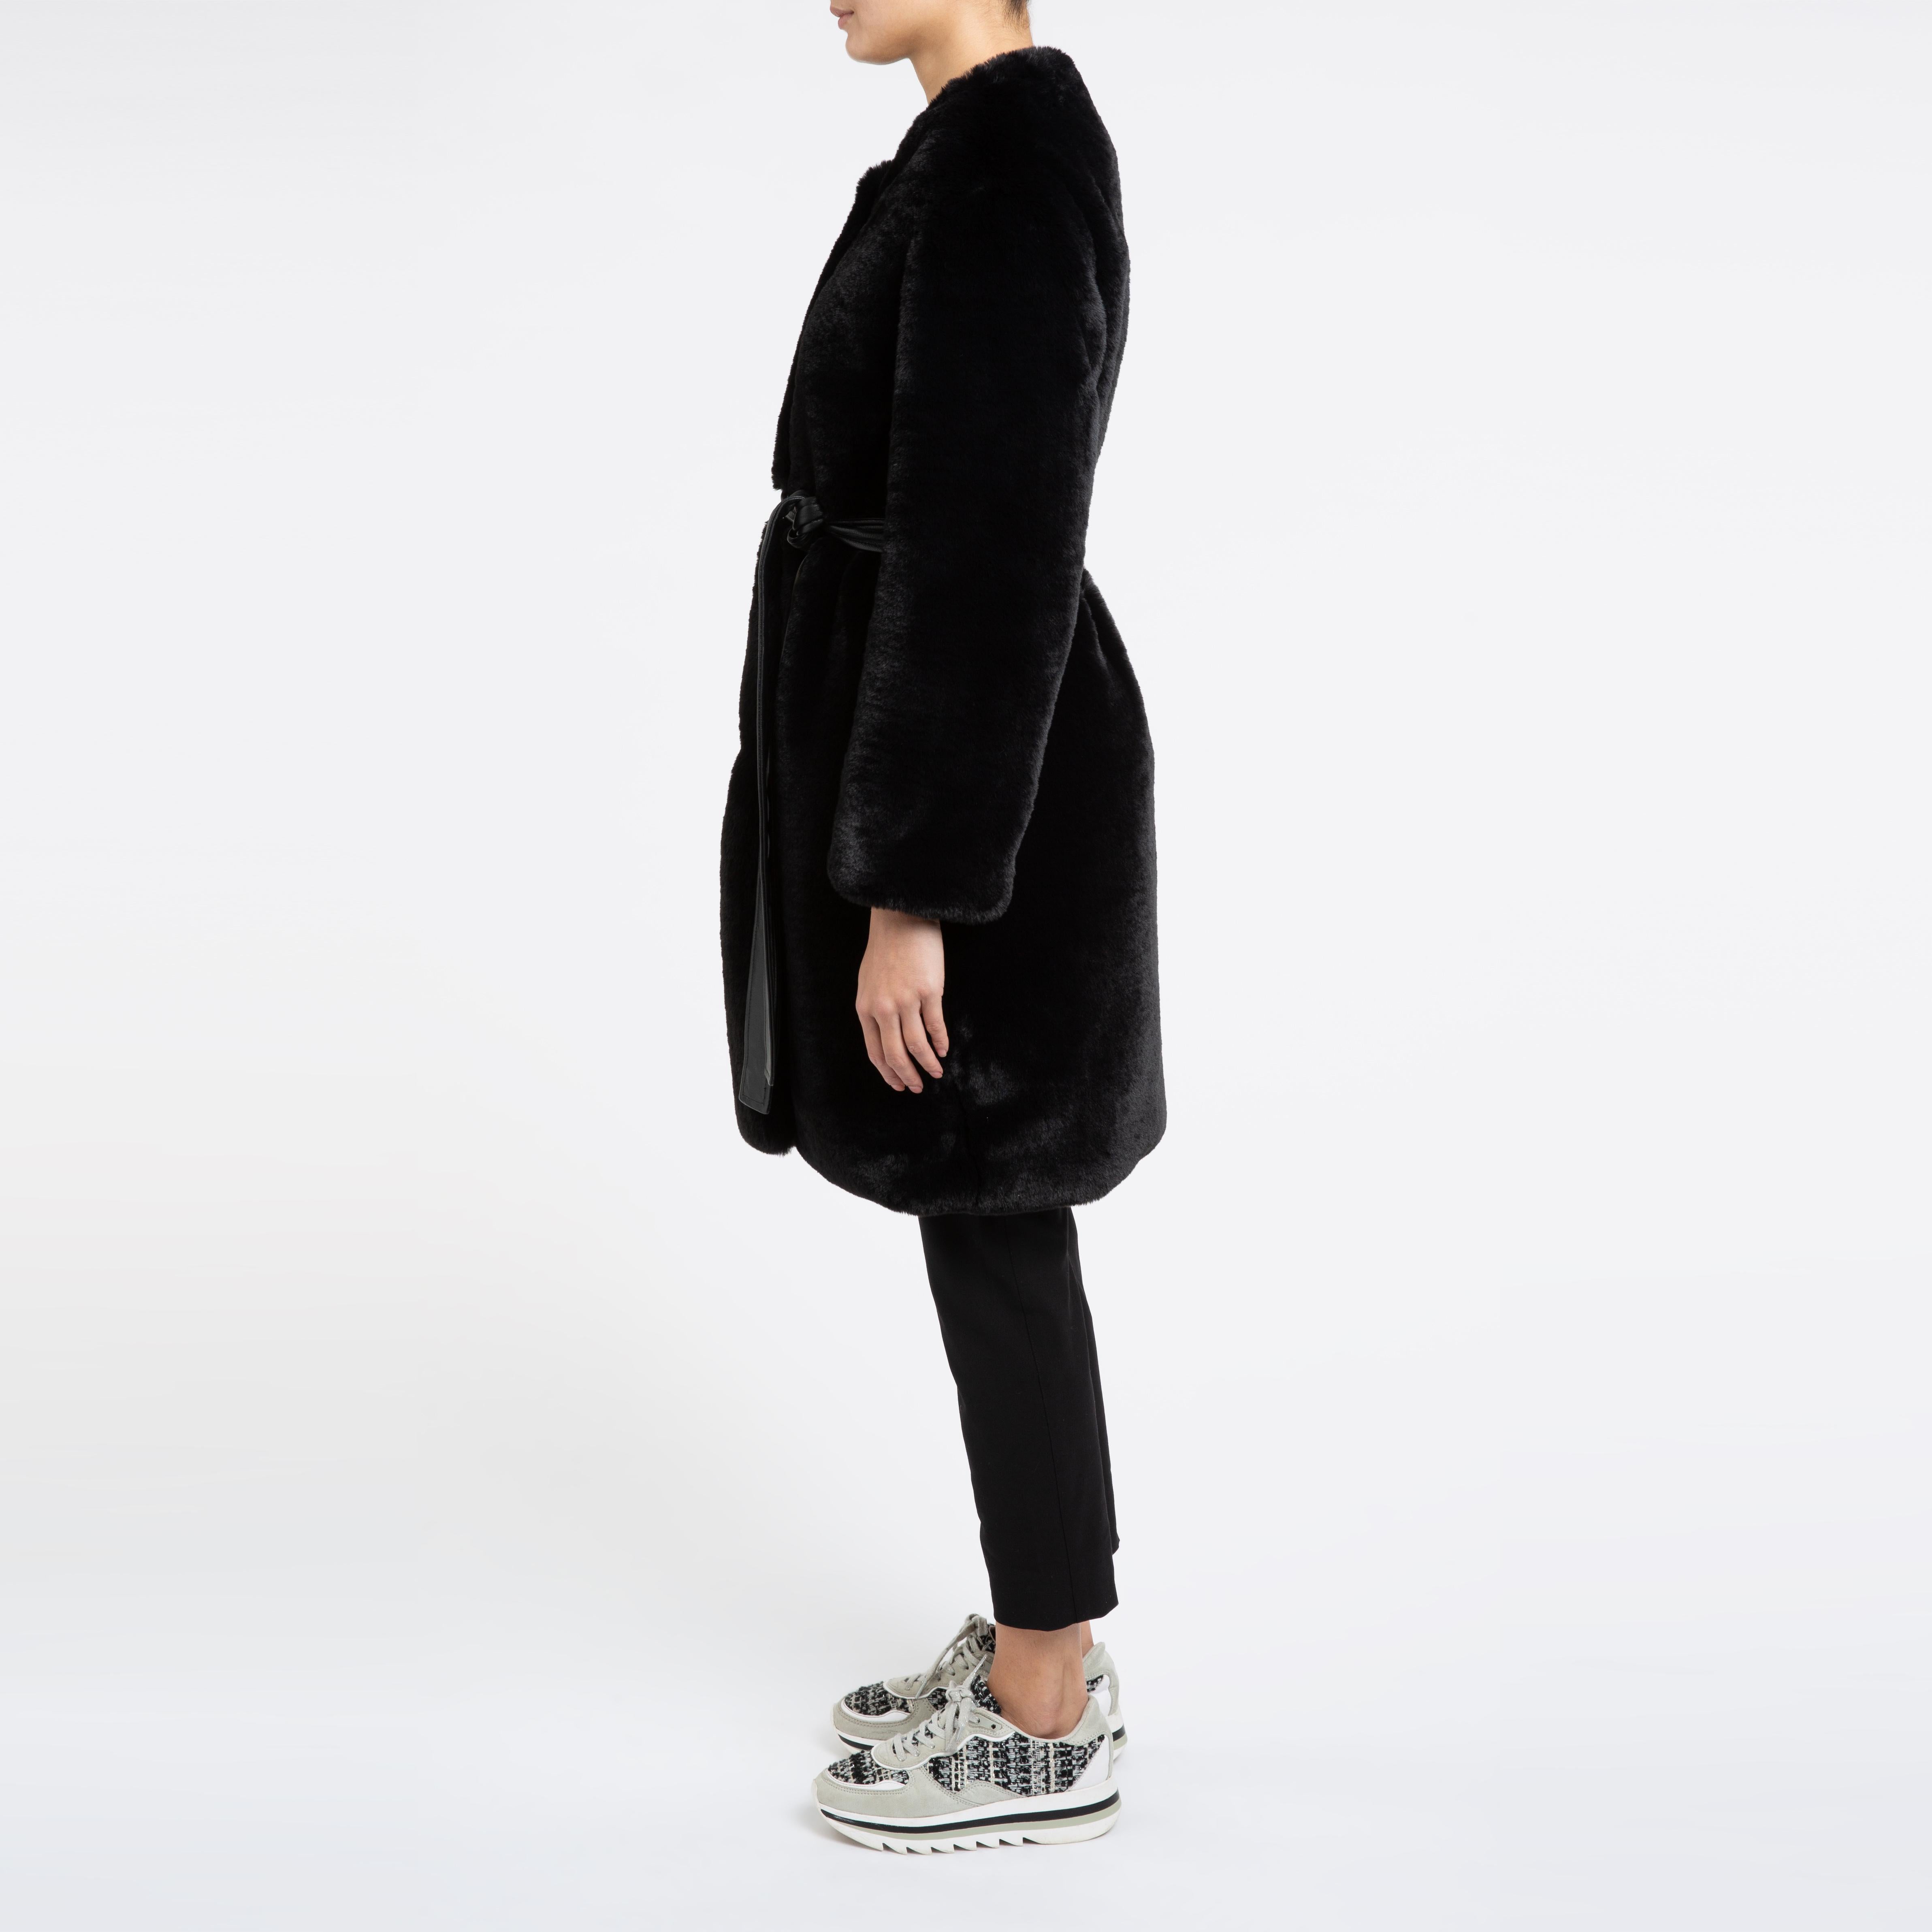 Verheyen London Serena  Collarless Faux Fur Coat in Black - Size uk 12  6